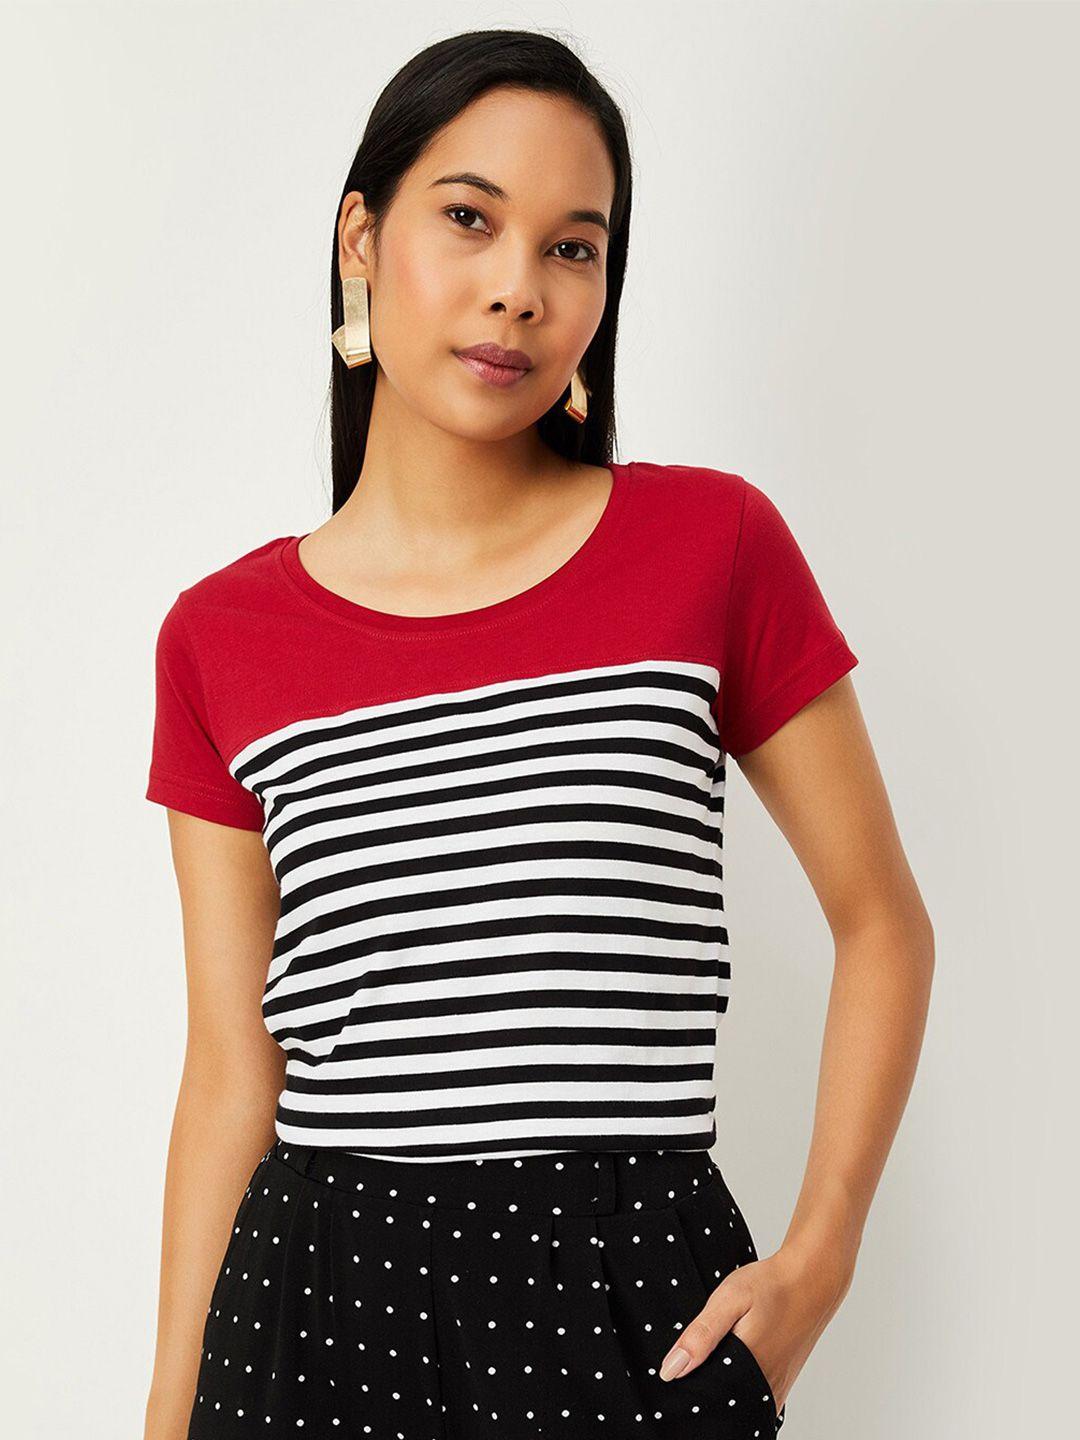 max-striped-pure-cotton-t-shirt